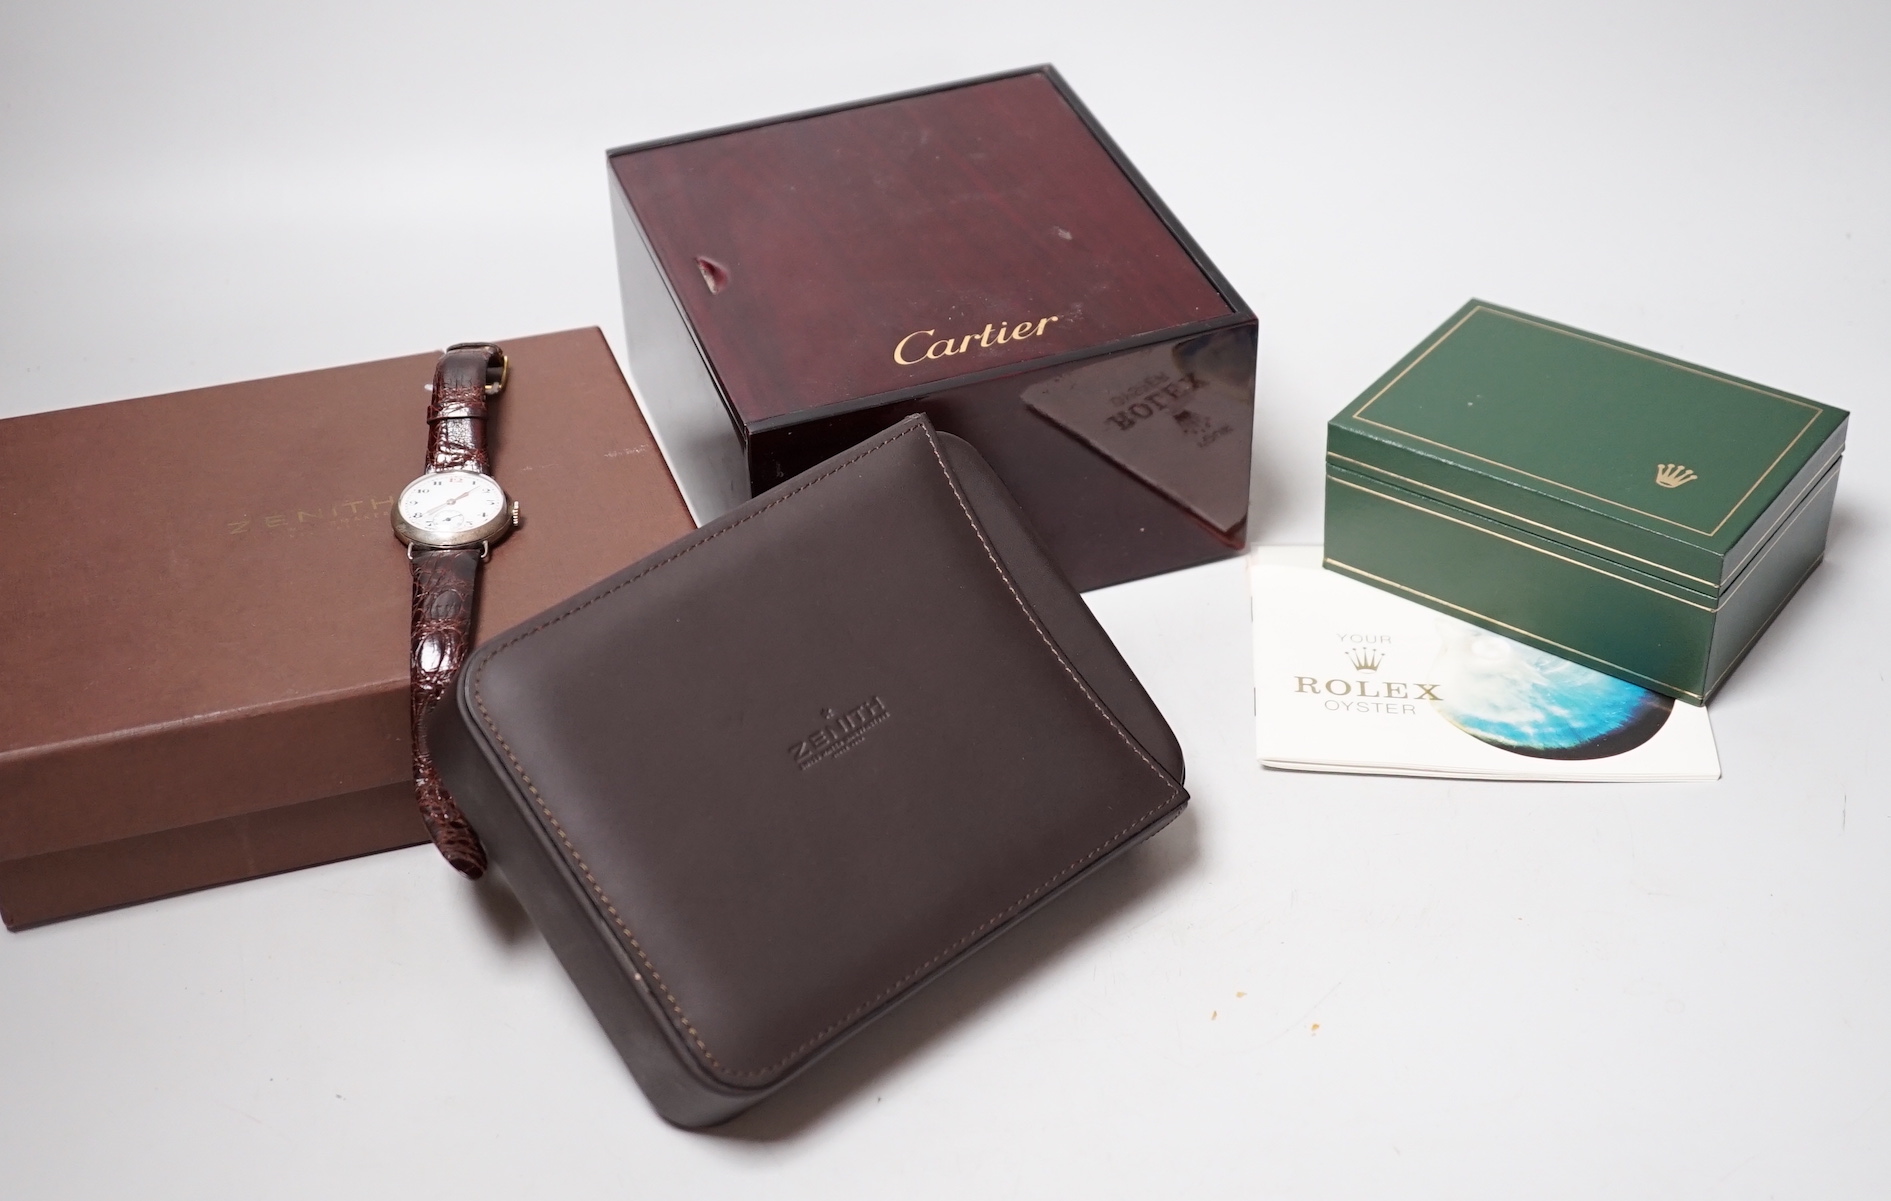 A Rolex watch box, Zenith watch box, Cartier watch box and a gentleman's early 20th century silver manual wind wrist watch.